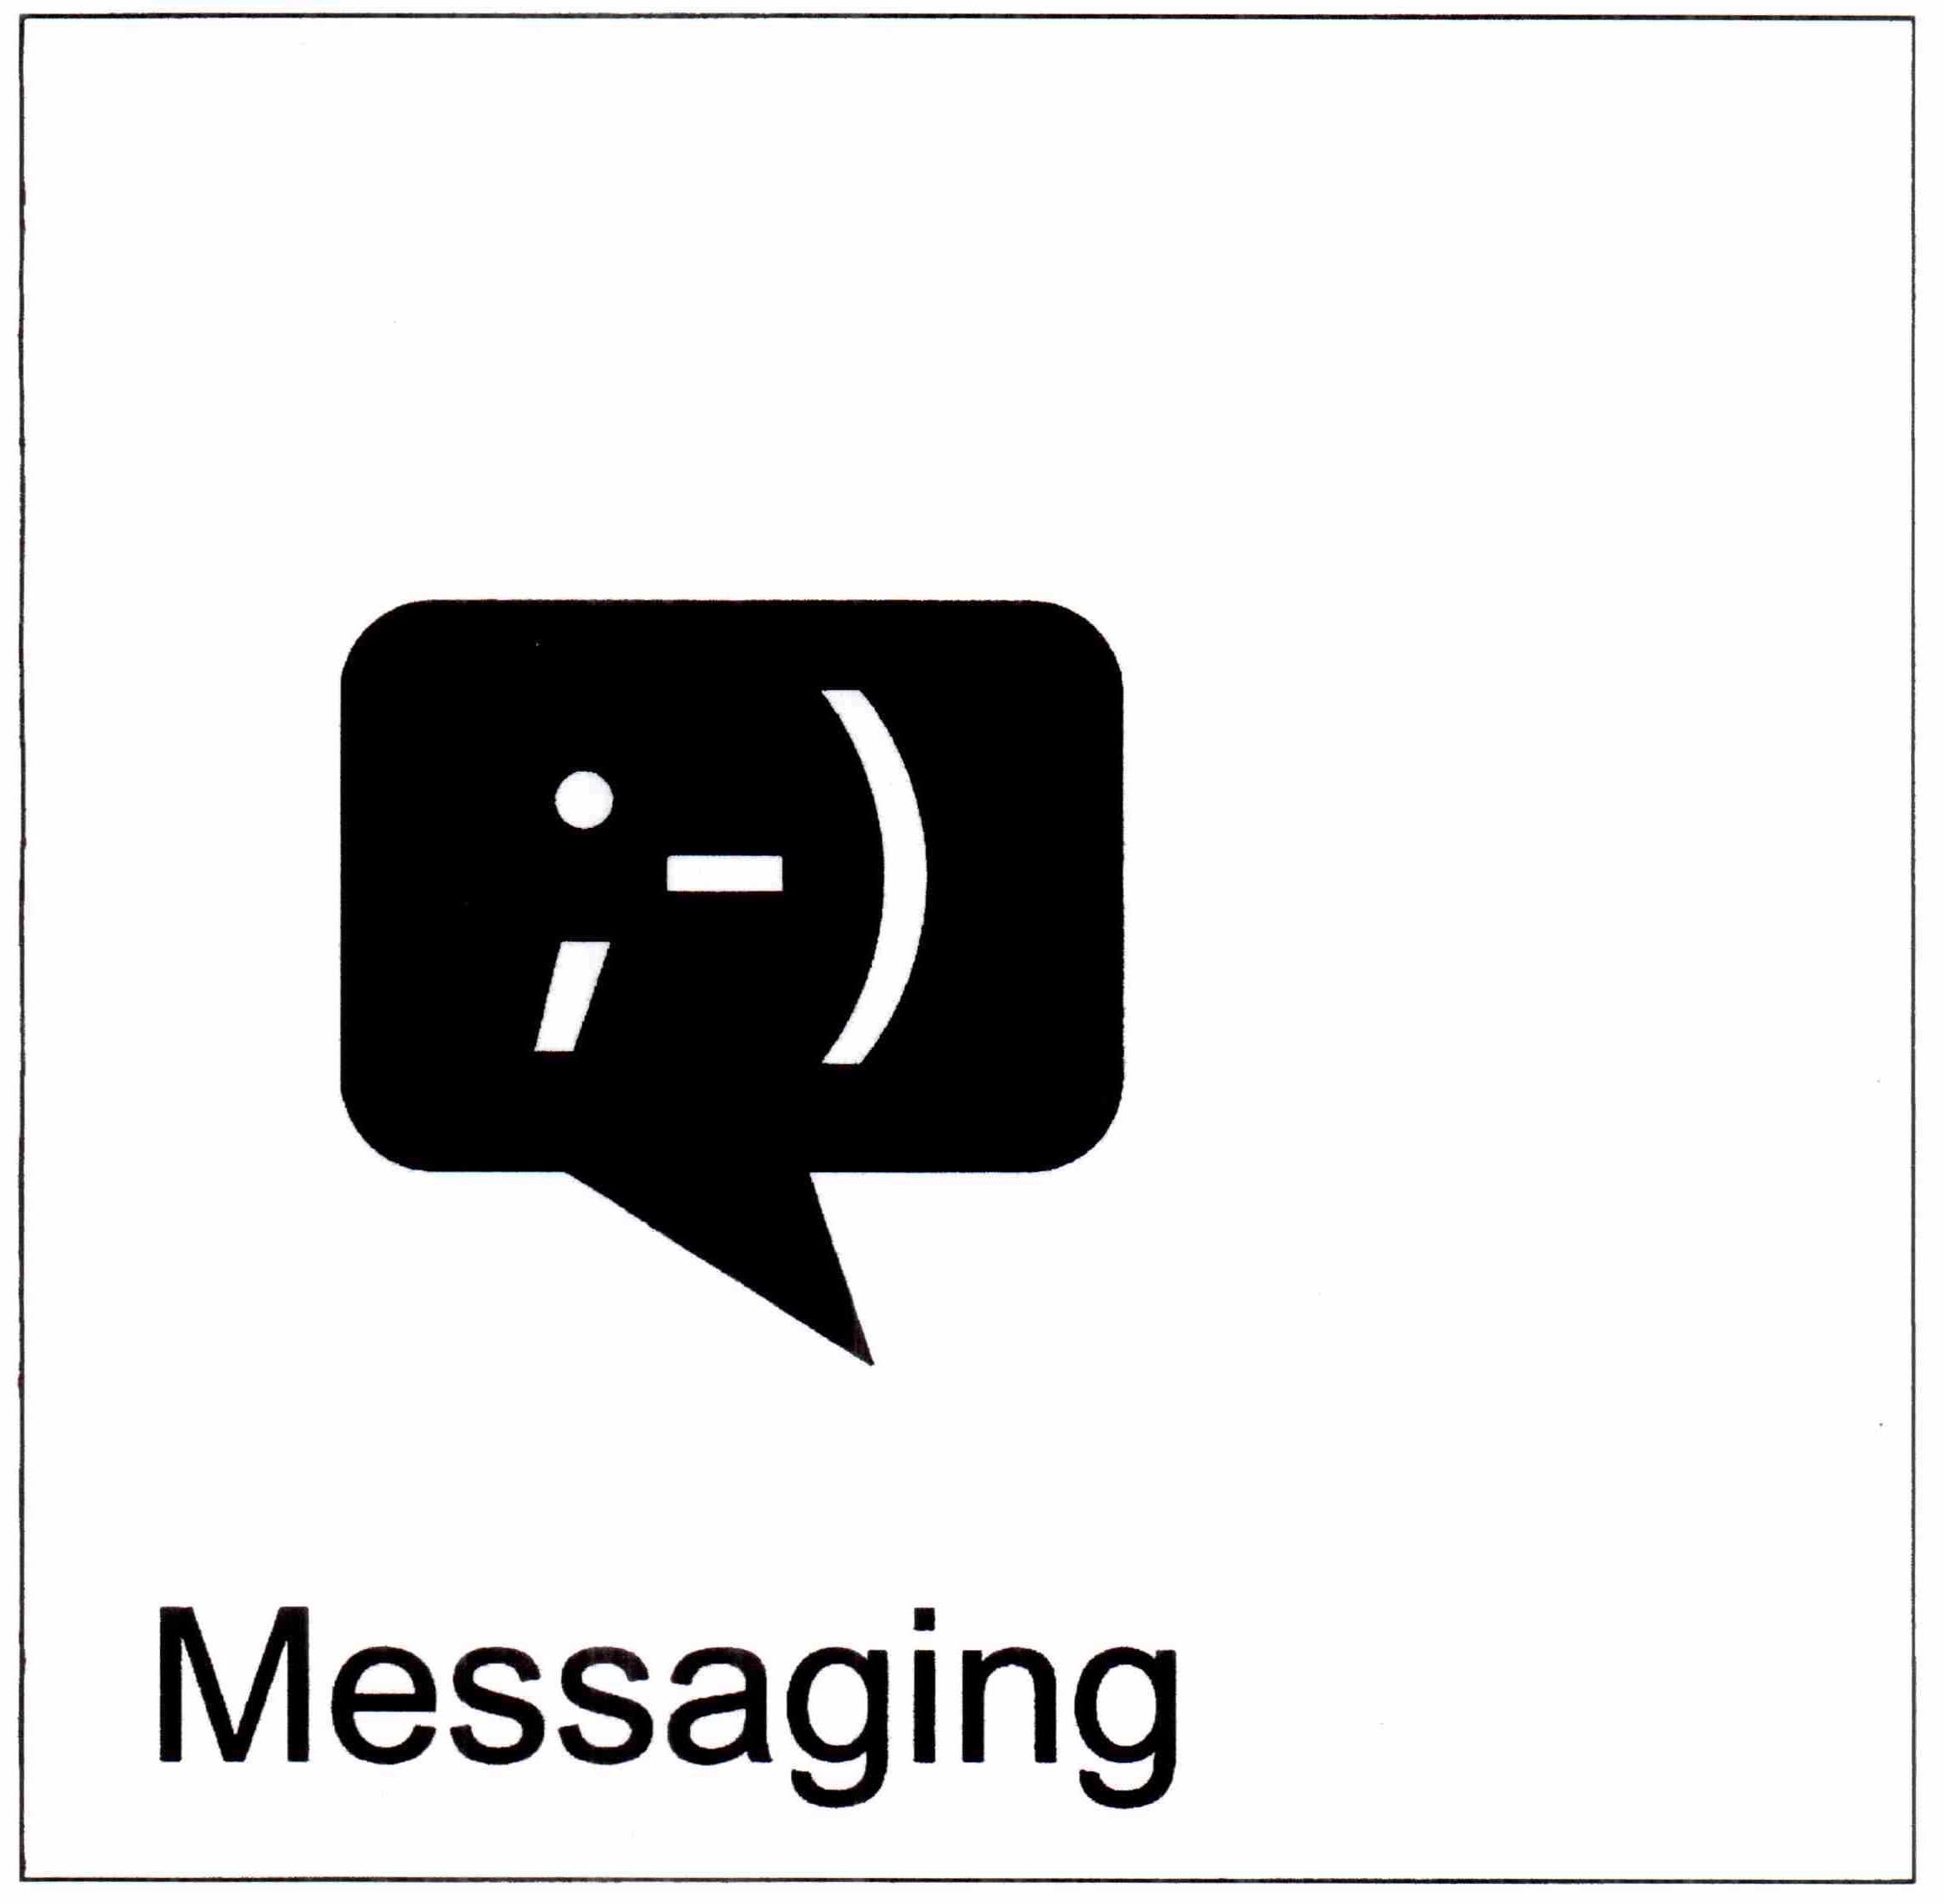 MESSAGING